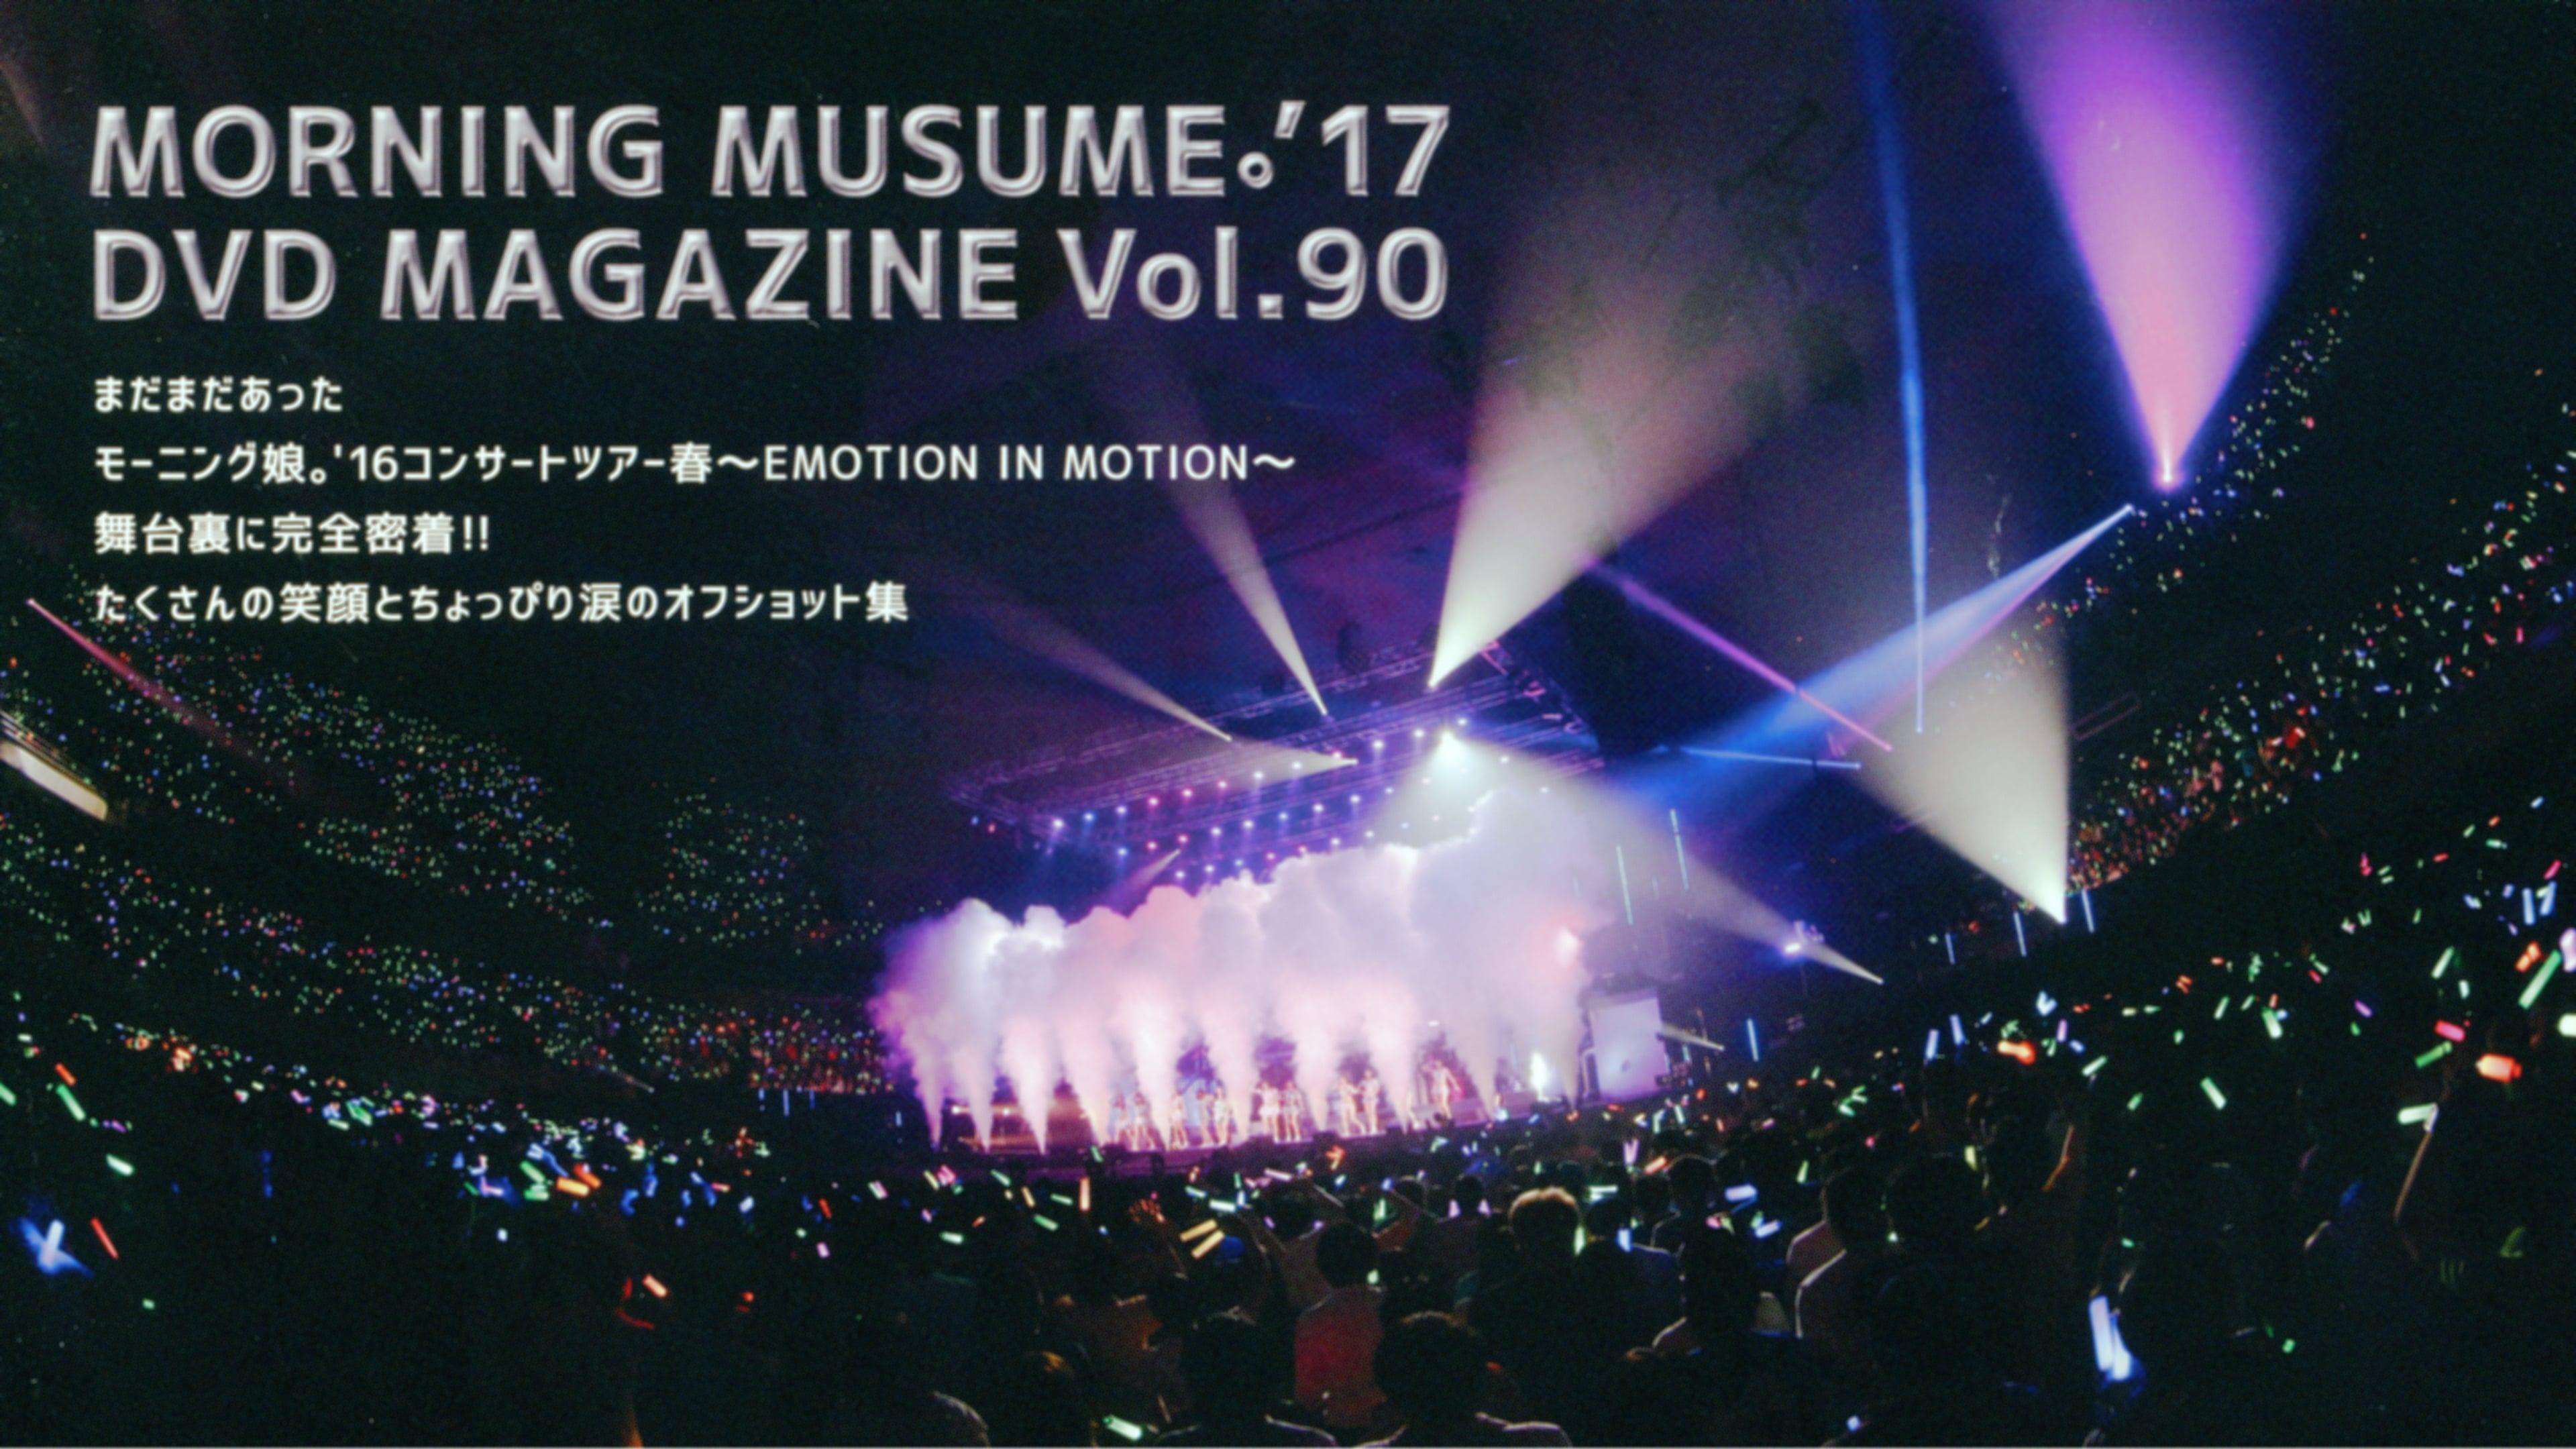 Morning Musume.'17 DVD Magazine Vol.90 backdrop